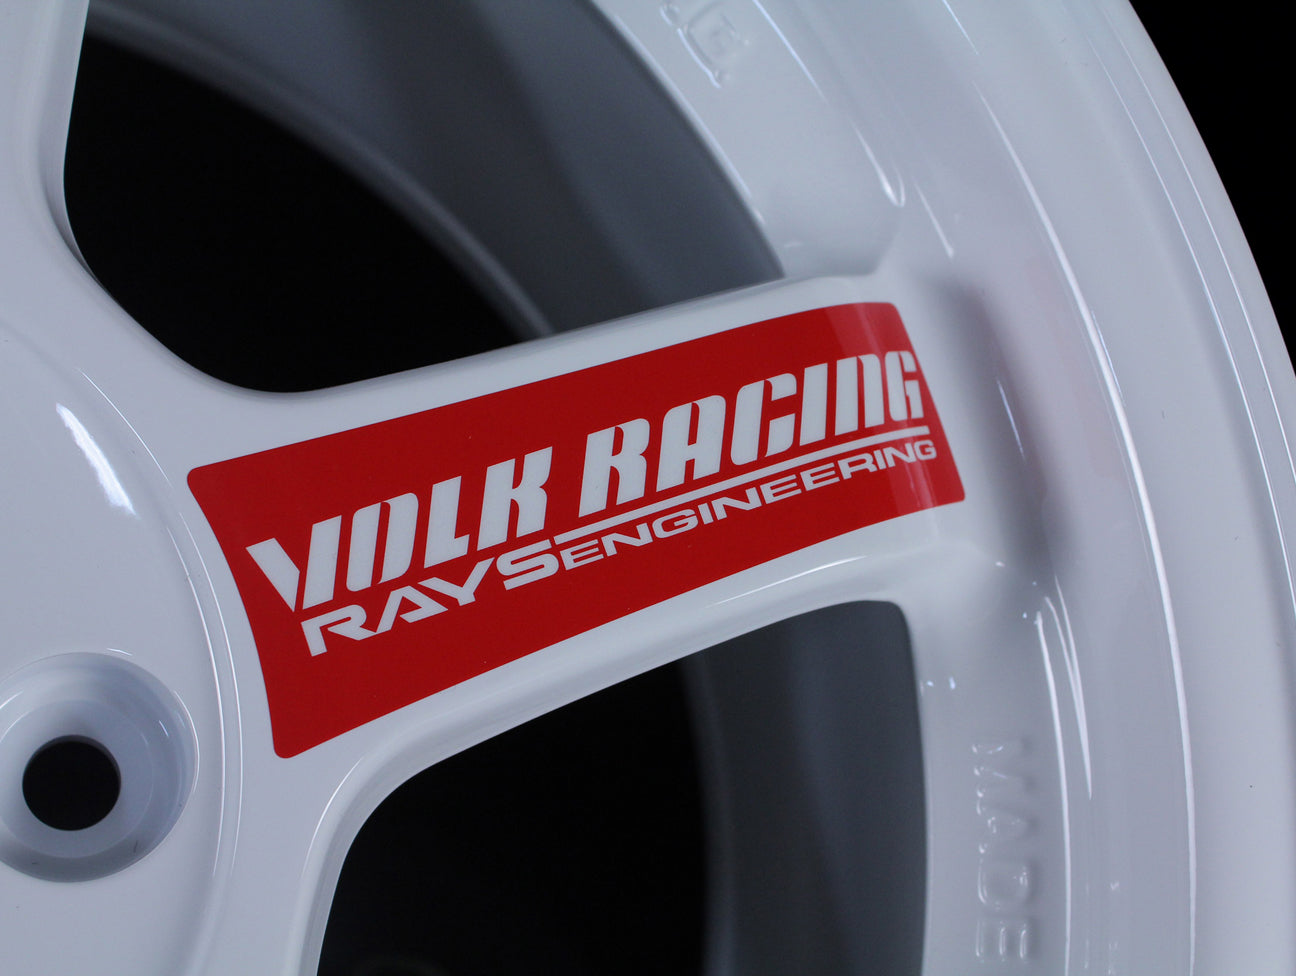 Volk Racing TE37SL Super Lap Edition - Dash White 15x8.0 / 4x100 / +35